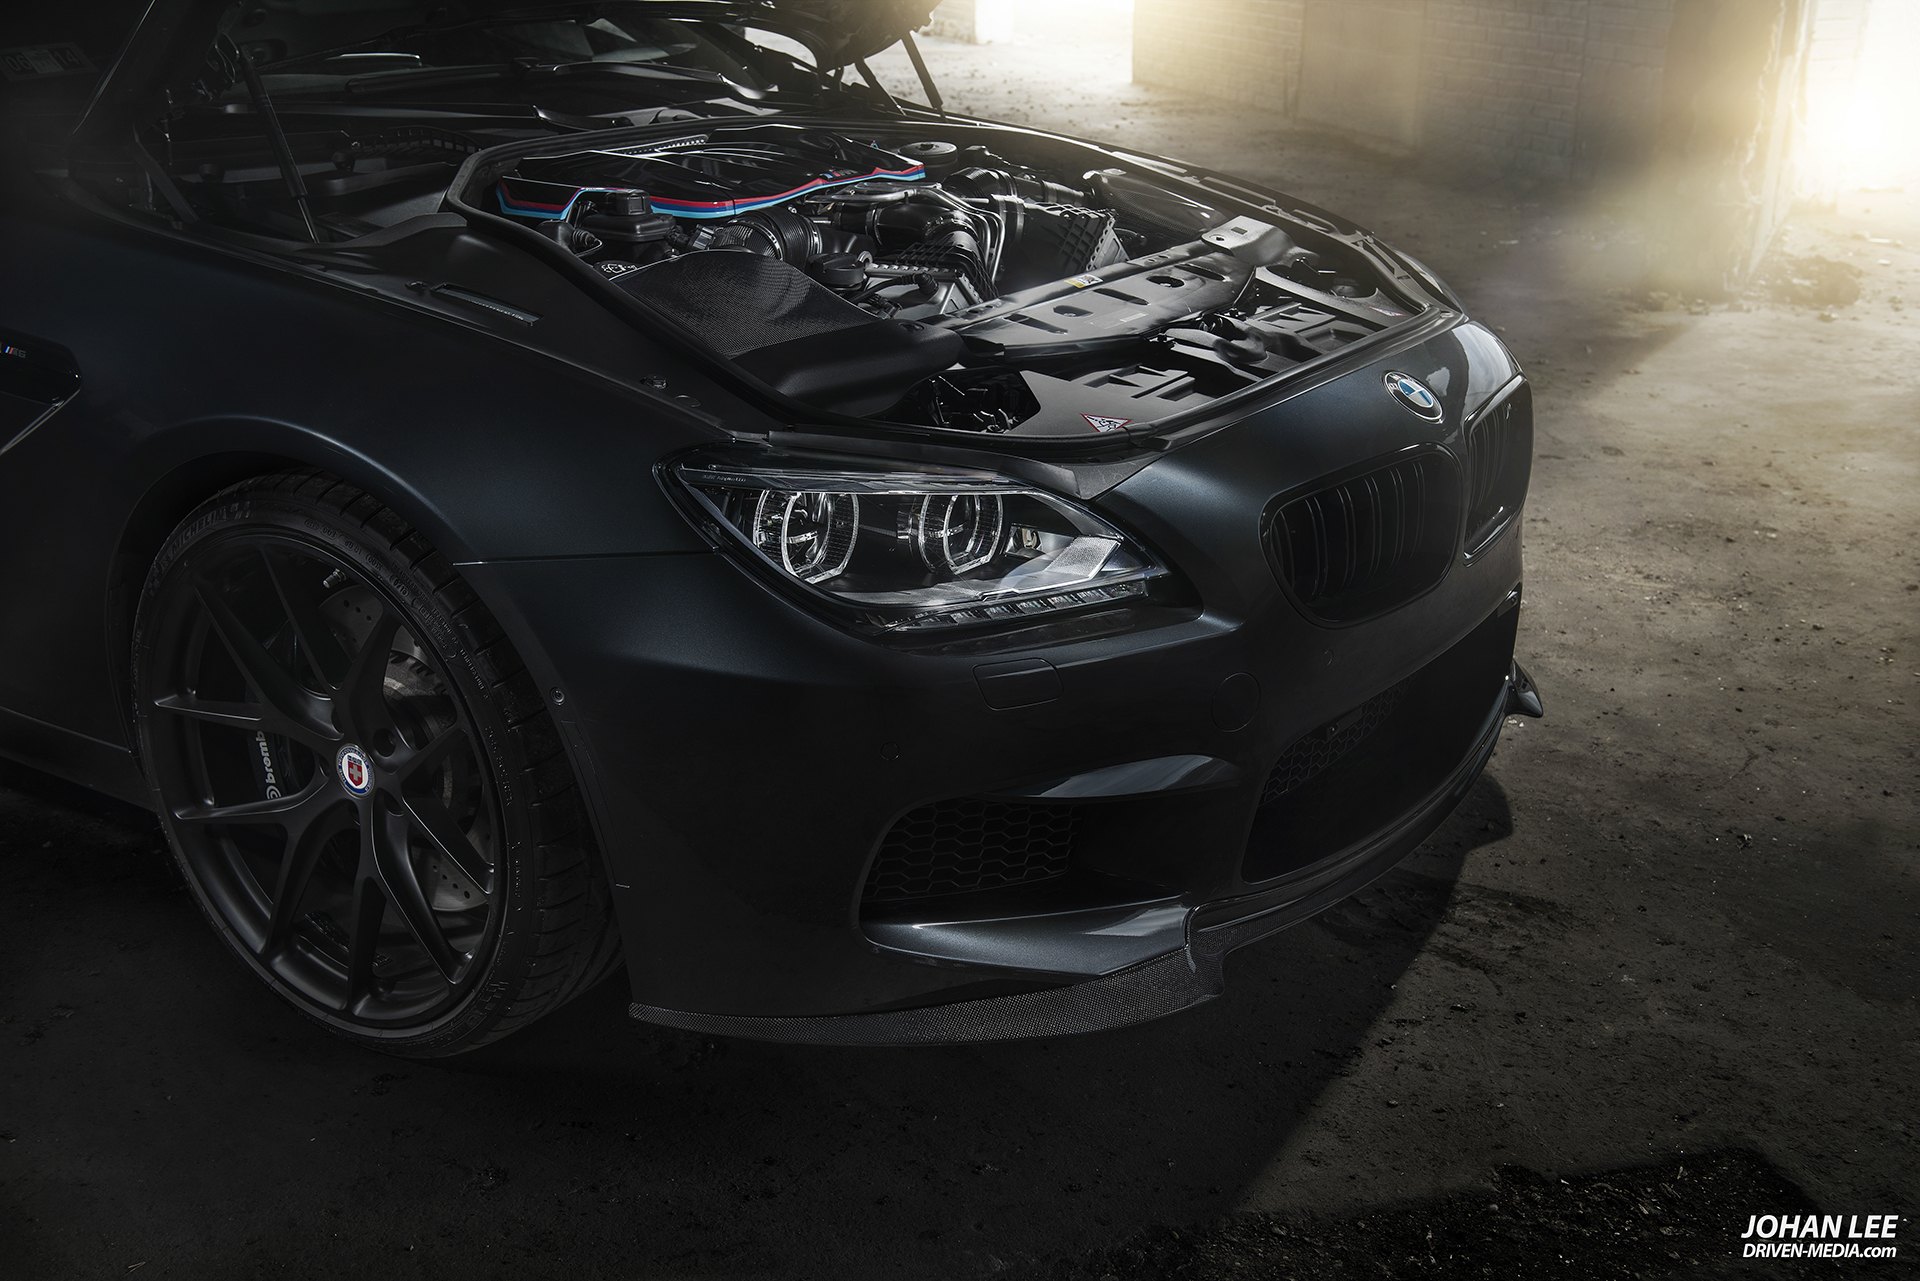 HRE Performance Wheels on Black BMW 6-Series - Photo by Johan Lee